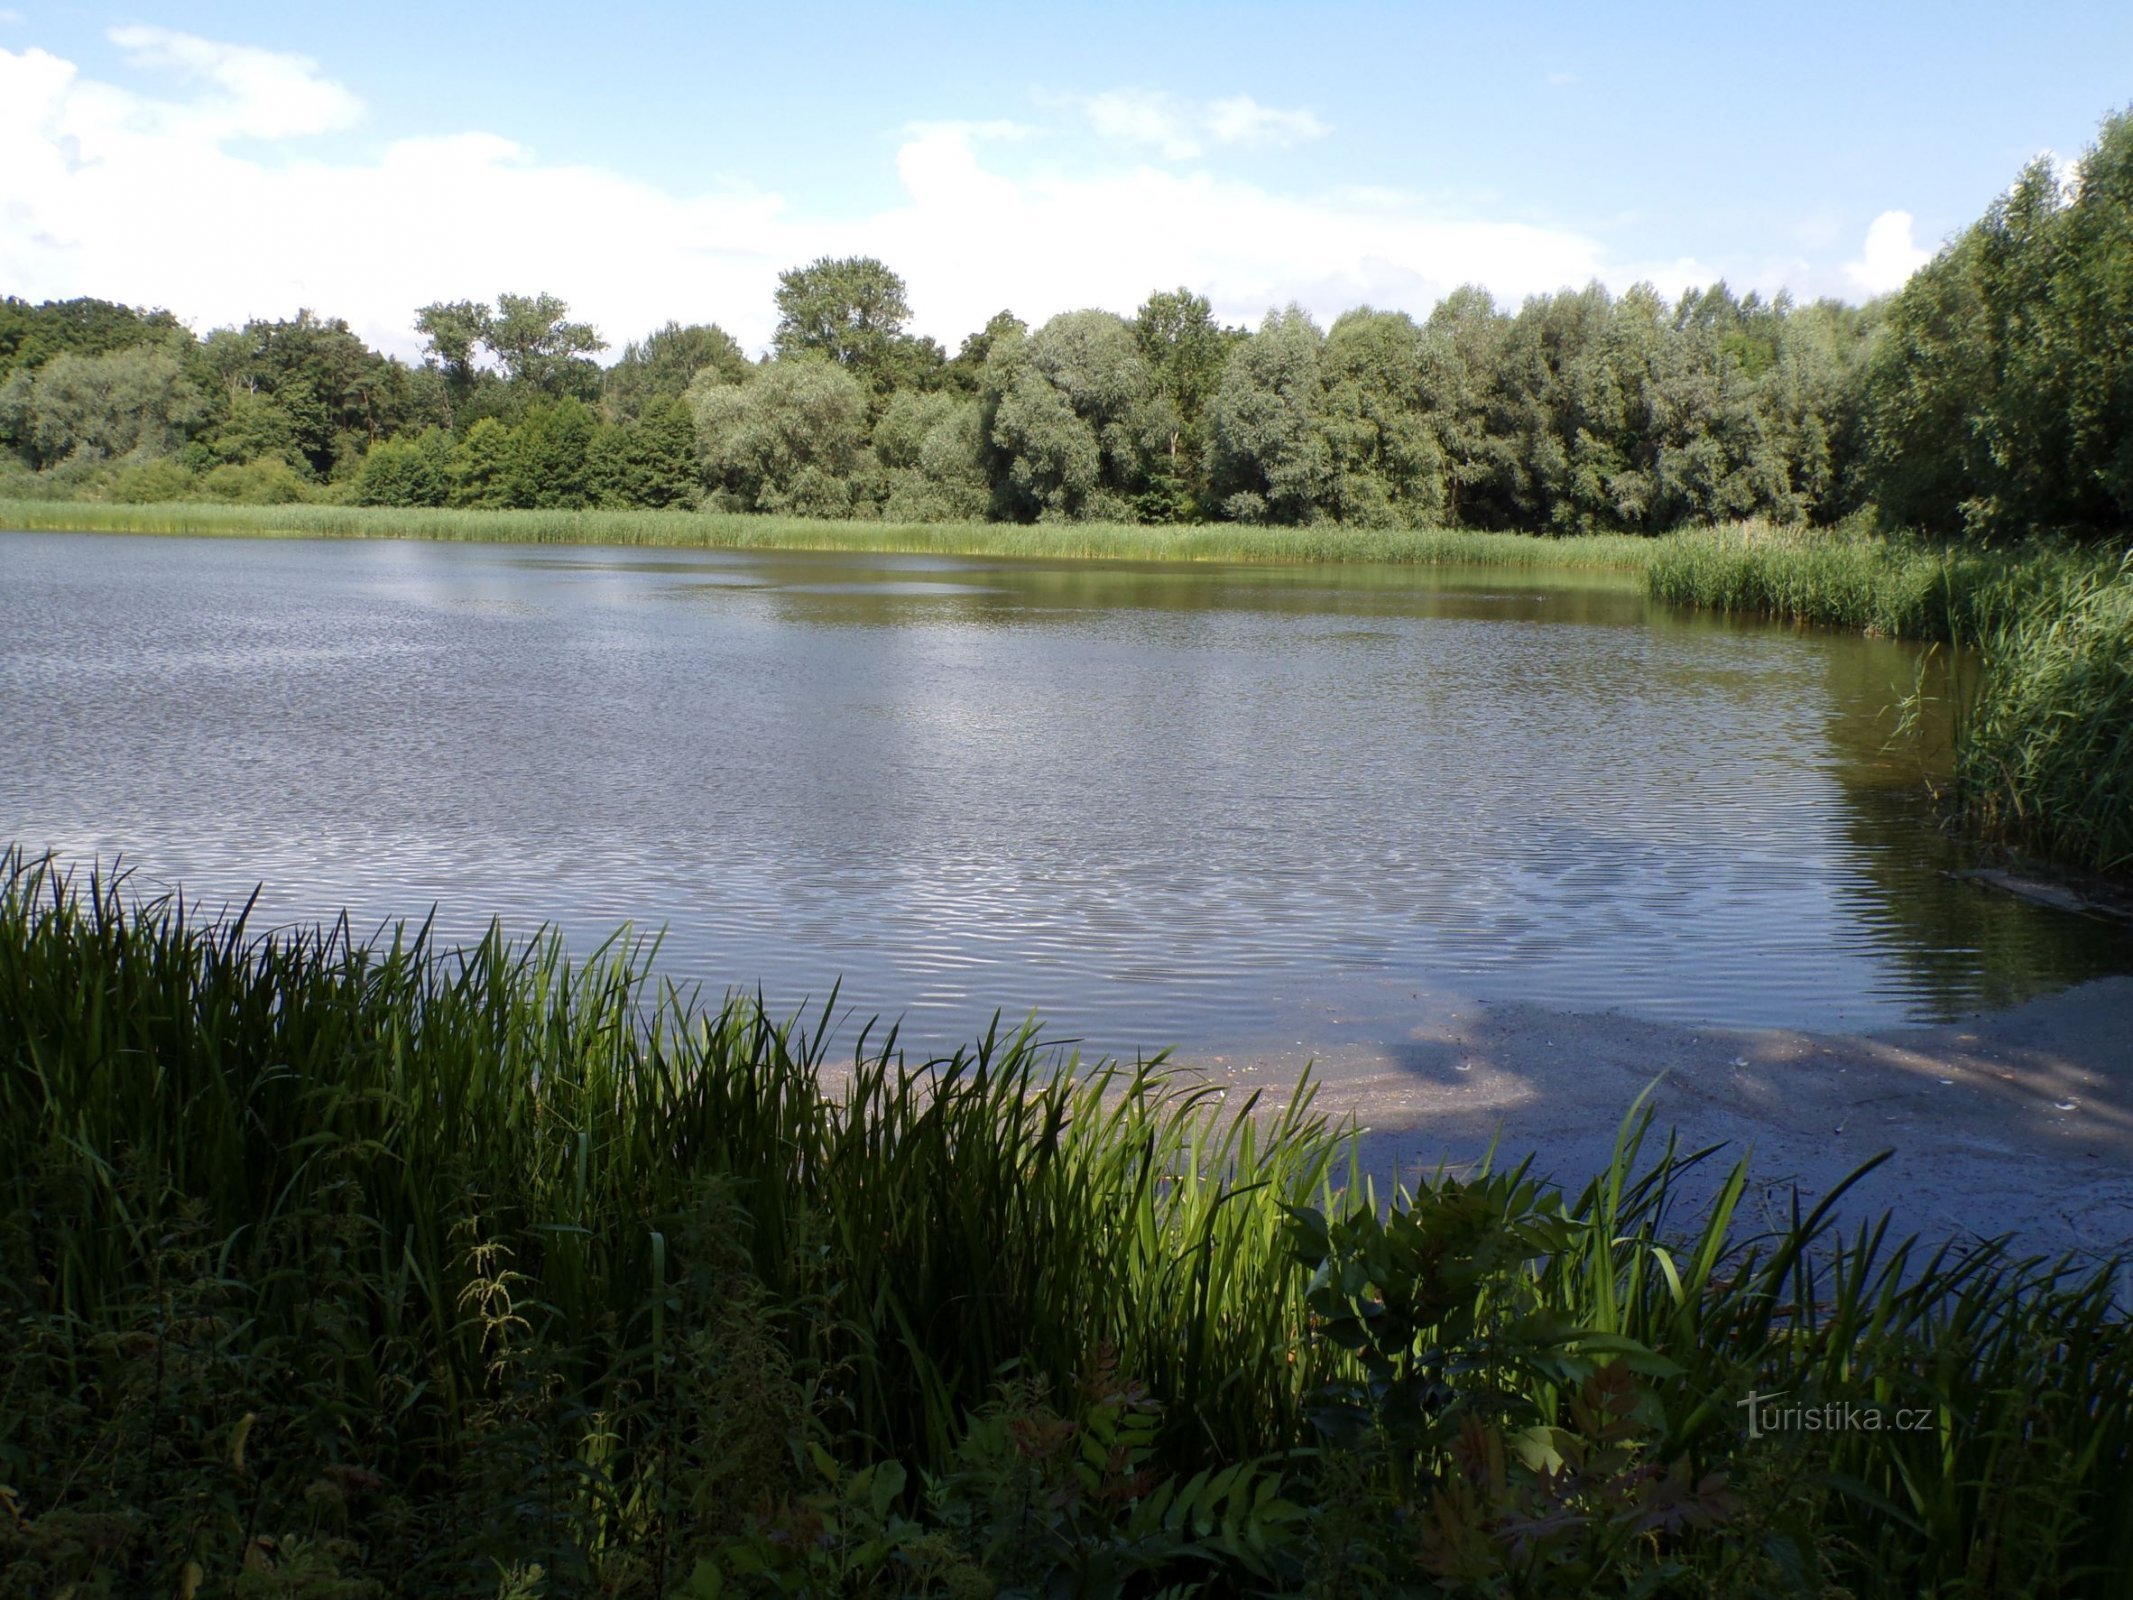 Tichý rybník (Lázně Bohdaneč, 19.7.2021)